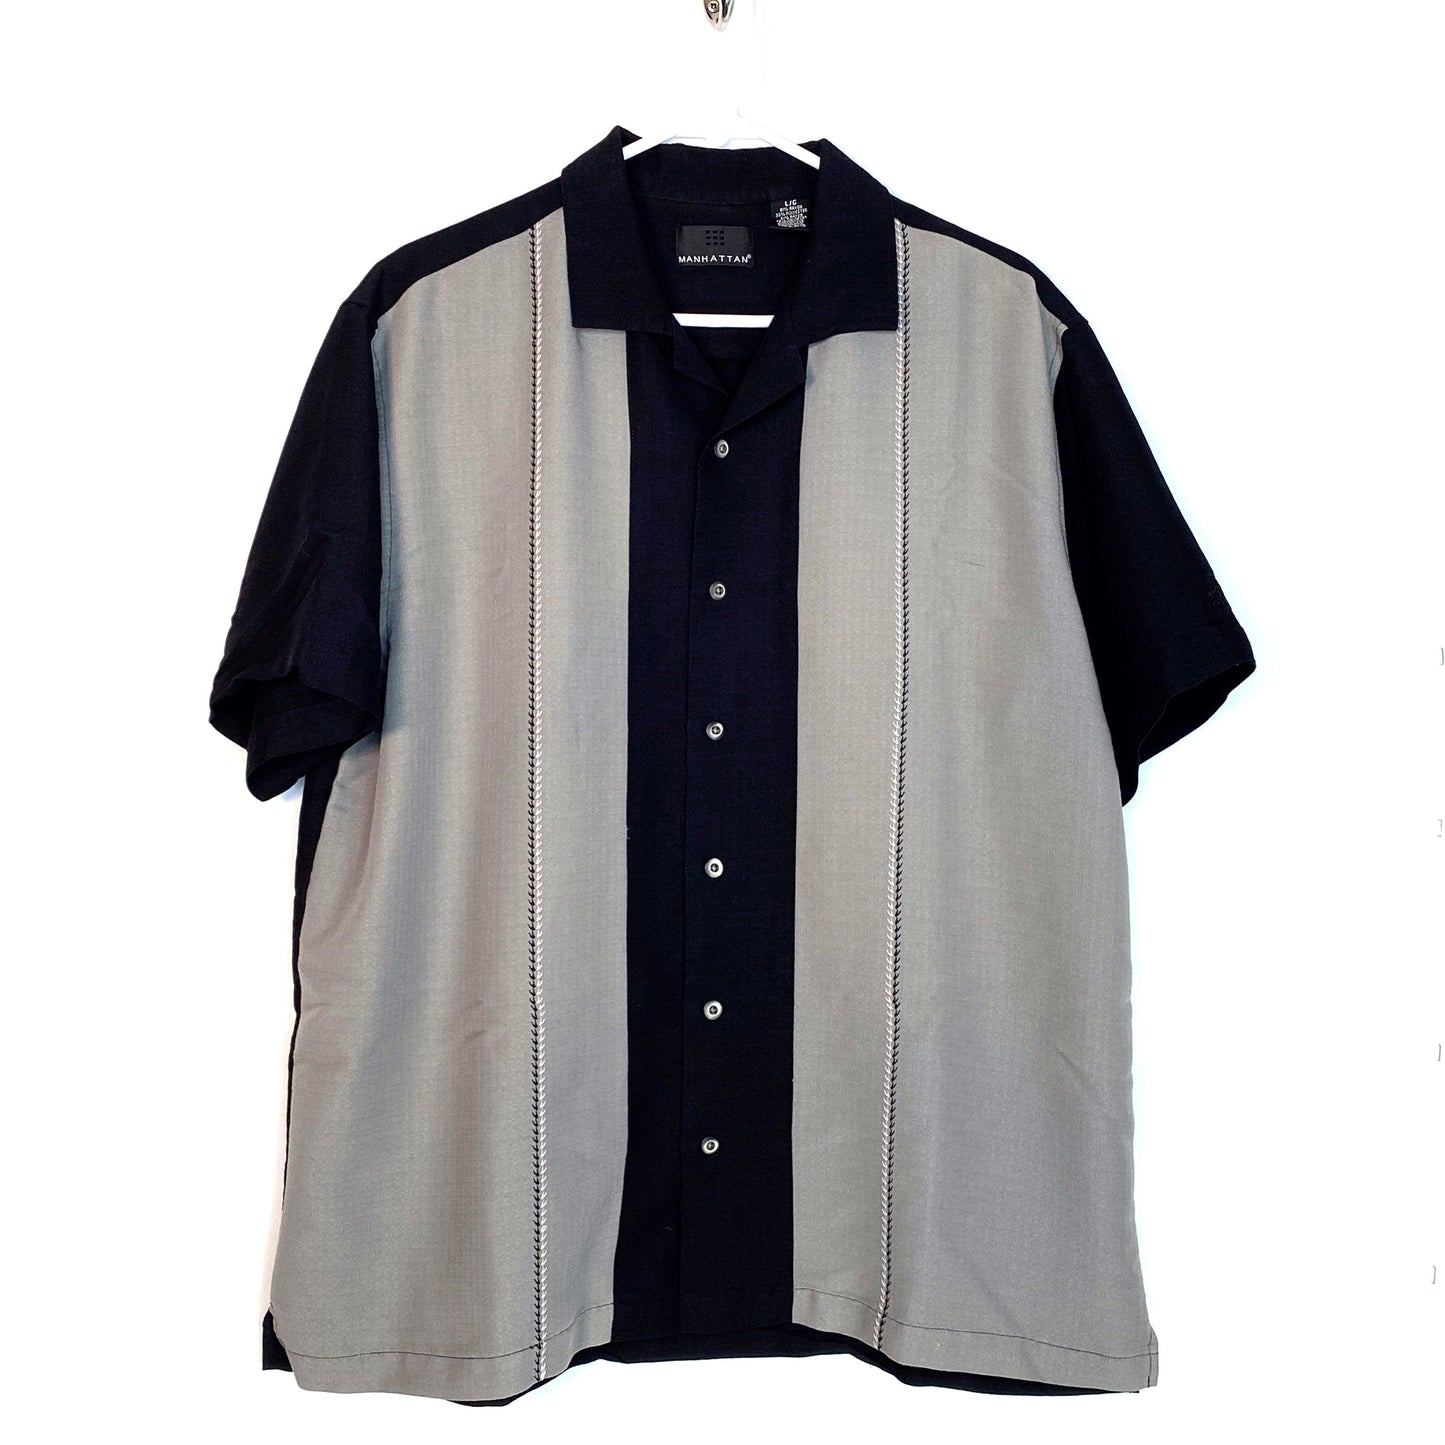 Nostalgic Manhattan Vintage Lounge Shirt - Black/Gray - Short Sleeve - Mens L